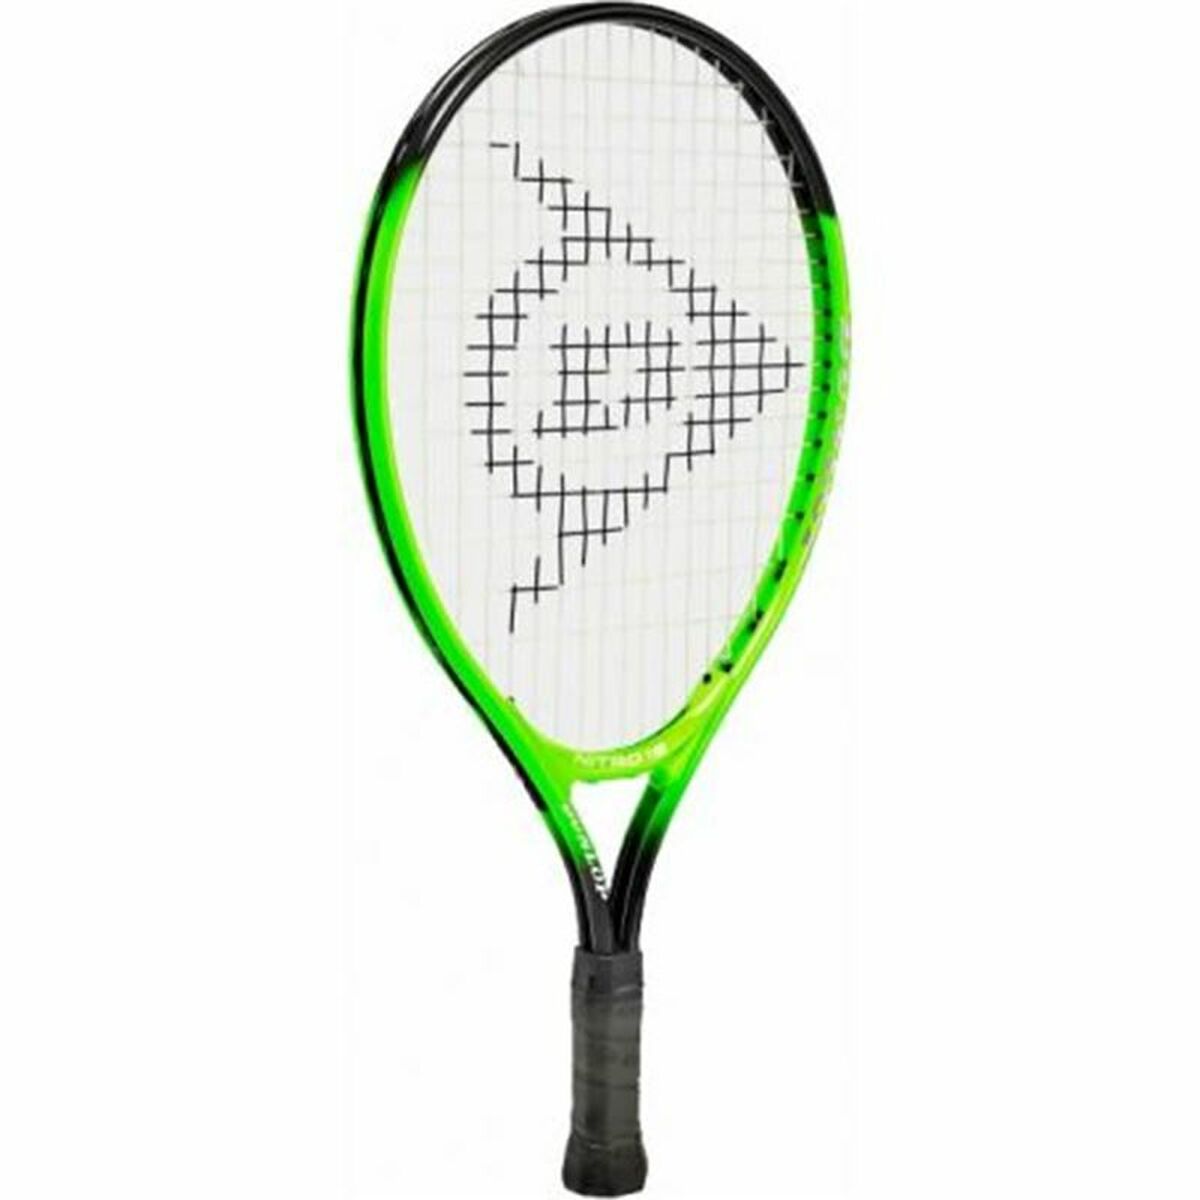 Racchetta da Tennis Dunlop Nitro 19 Verde limone Per bambini